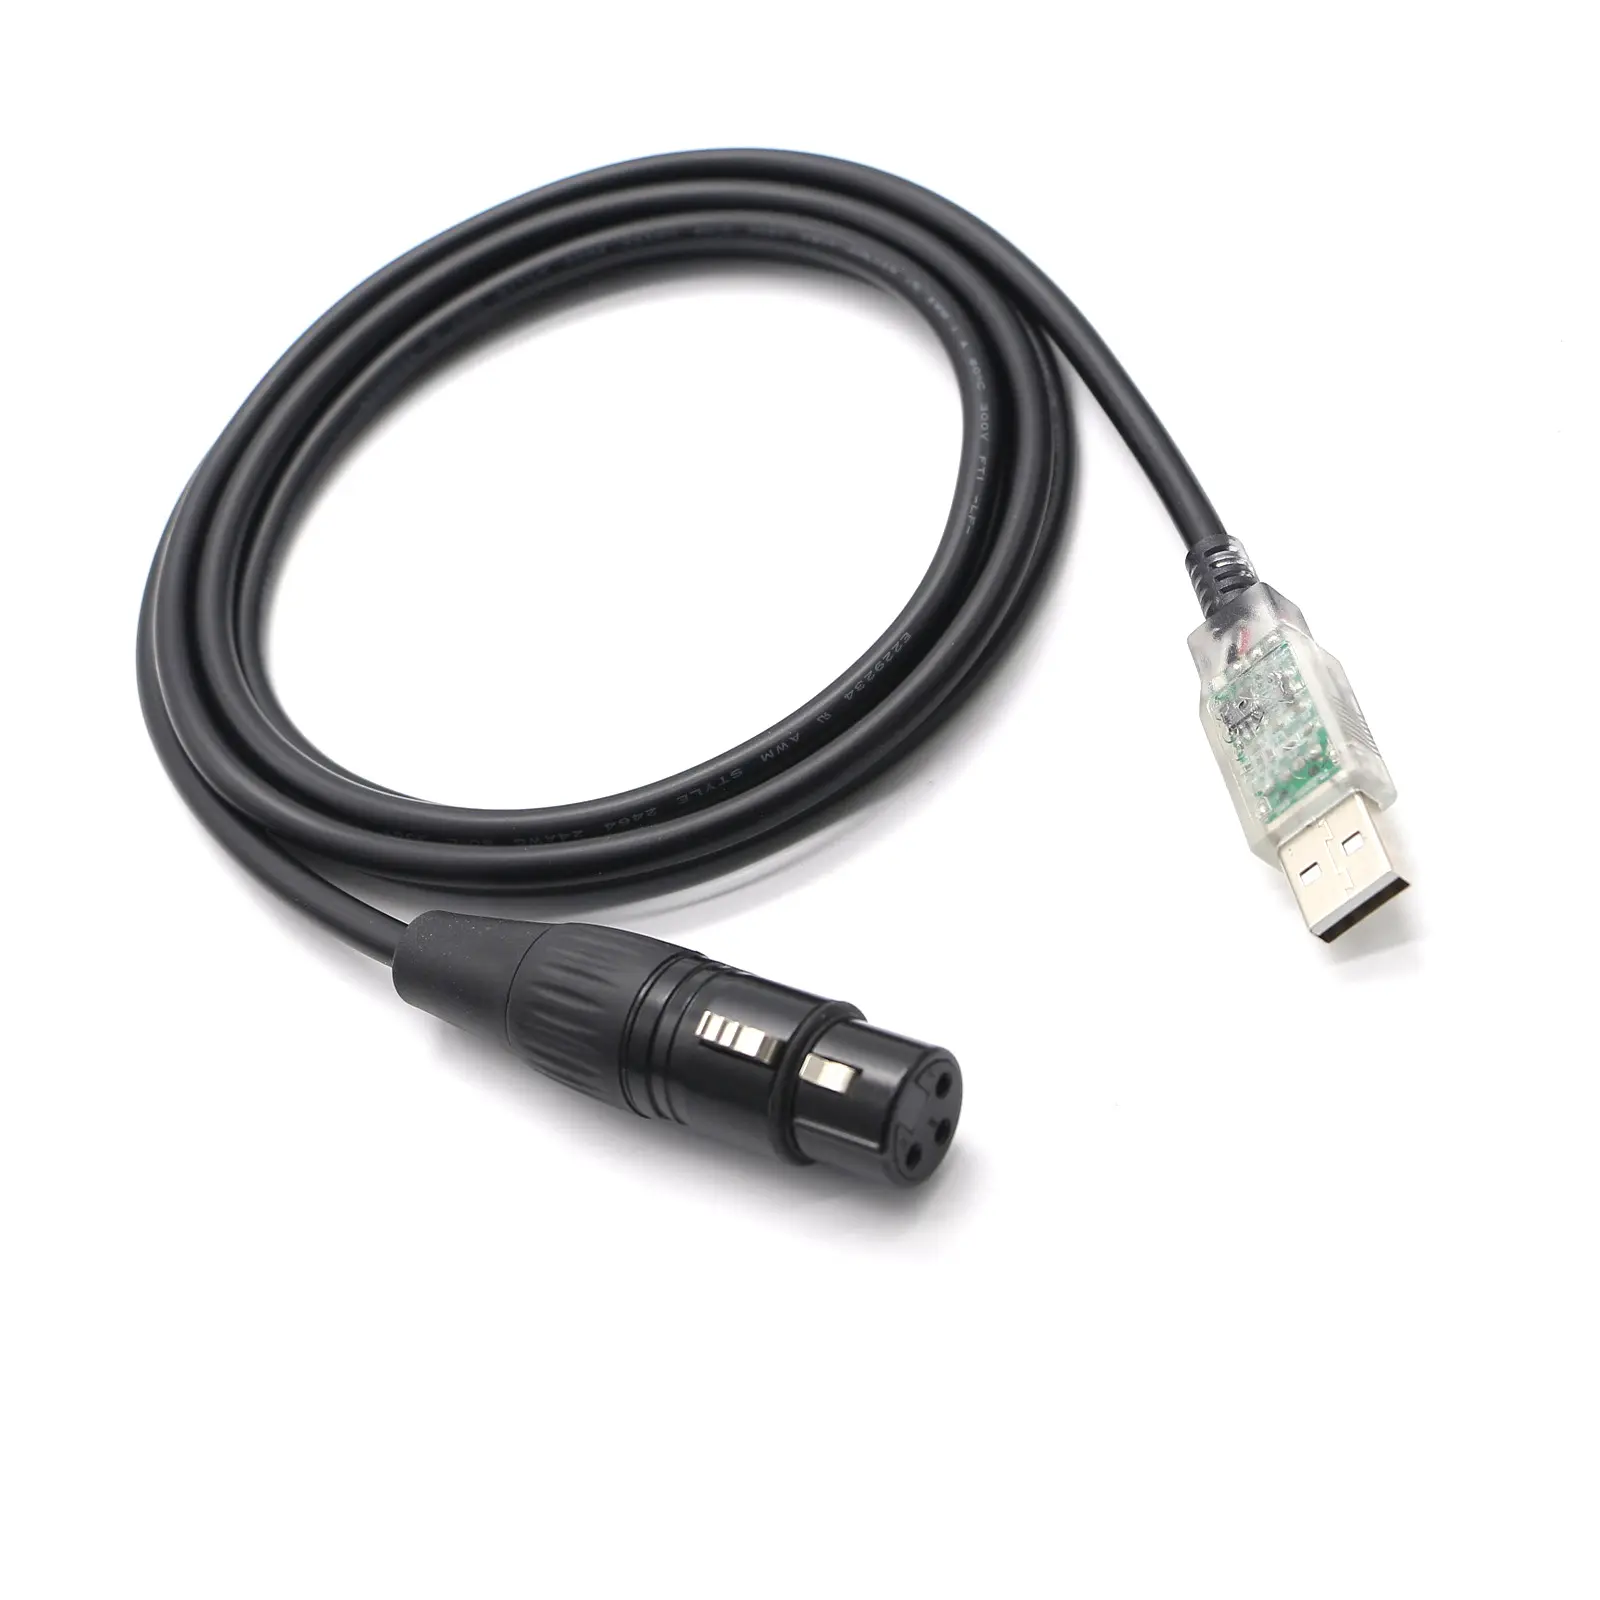 OEM fabrika seri kablo USB AM TX RX ışıkları adaptör kablosu ile RS485 XLR 3PIN erkek